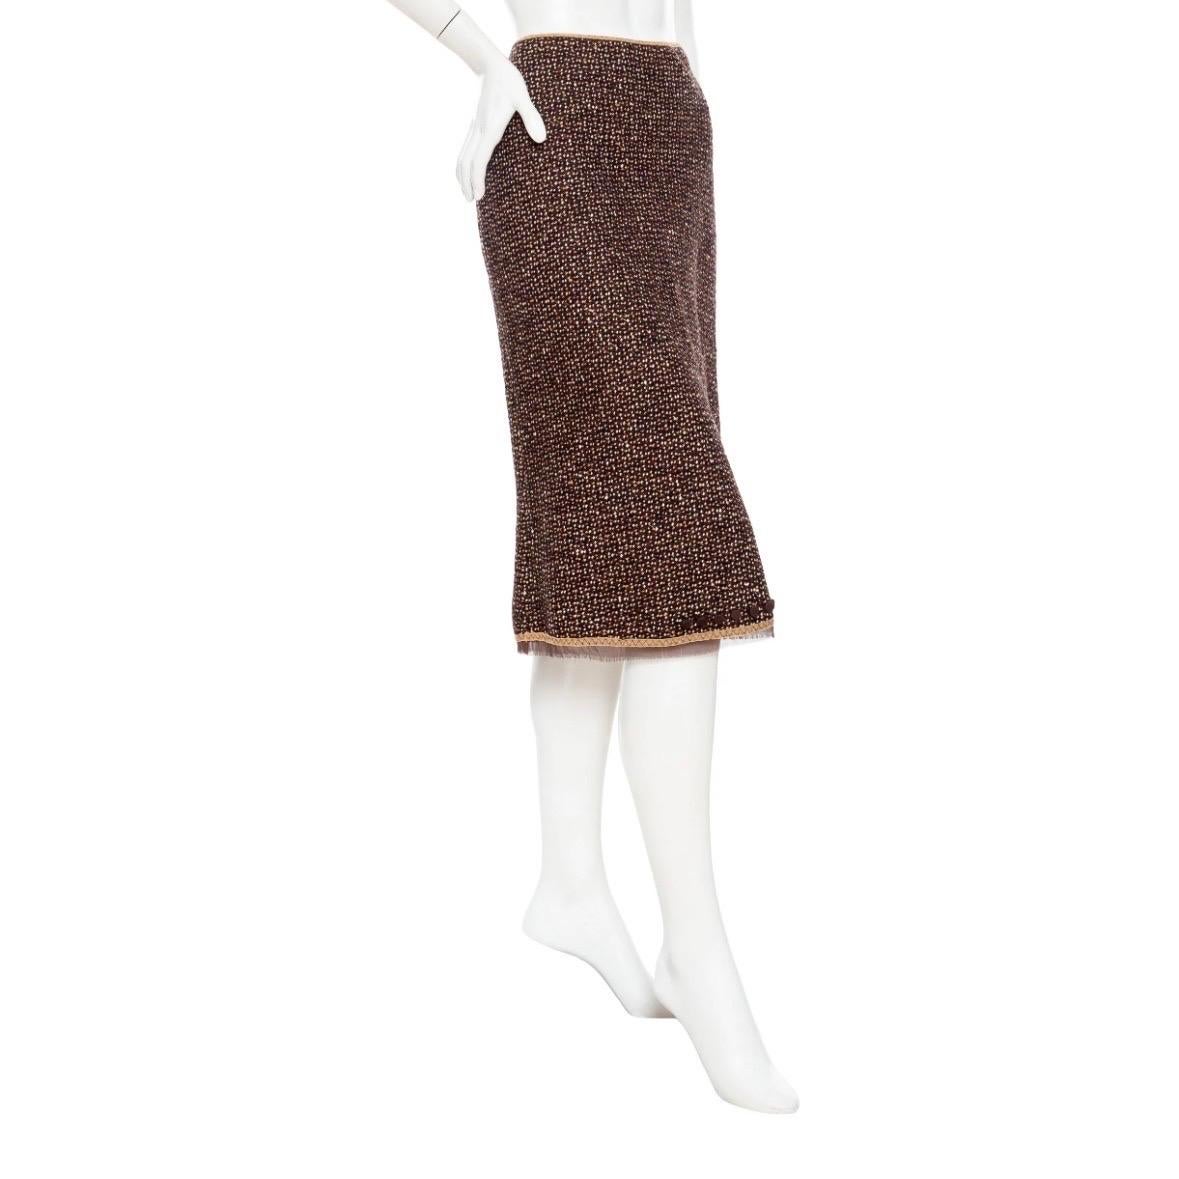 Prada Brown and Tan Virgin Wool Coat and Skirt Two-Piece Set 1